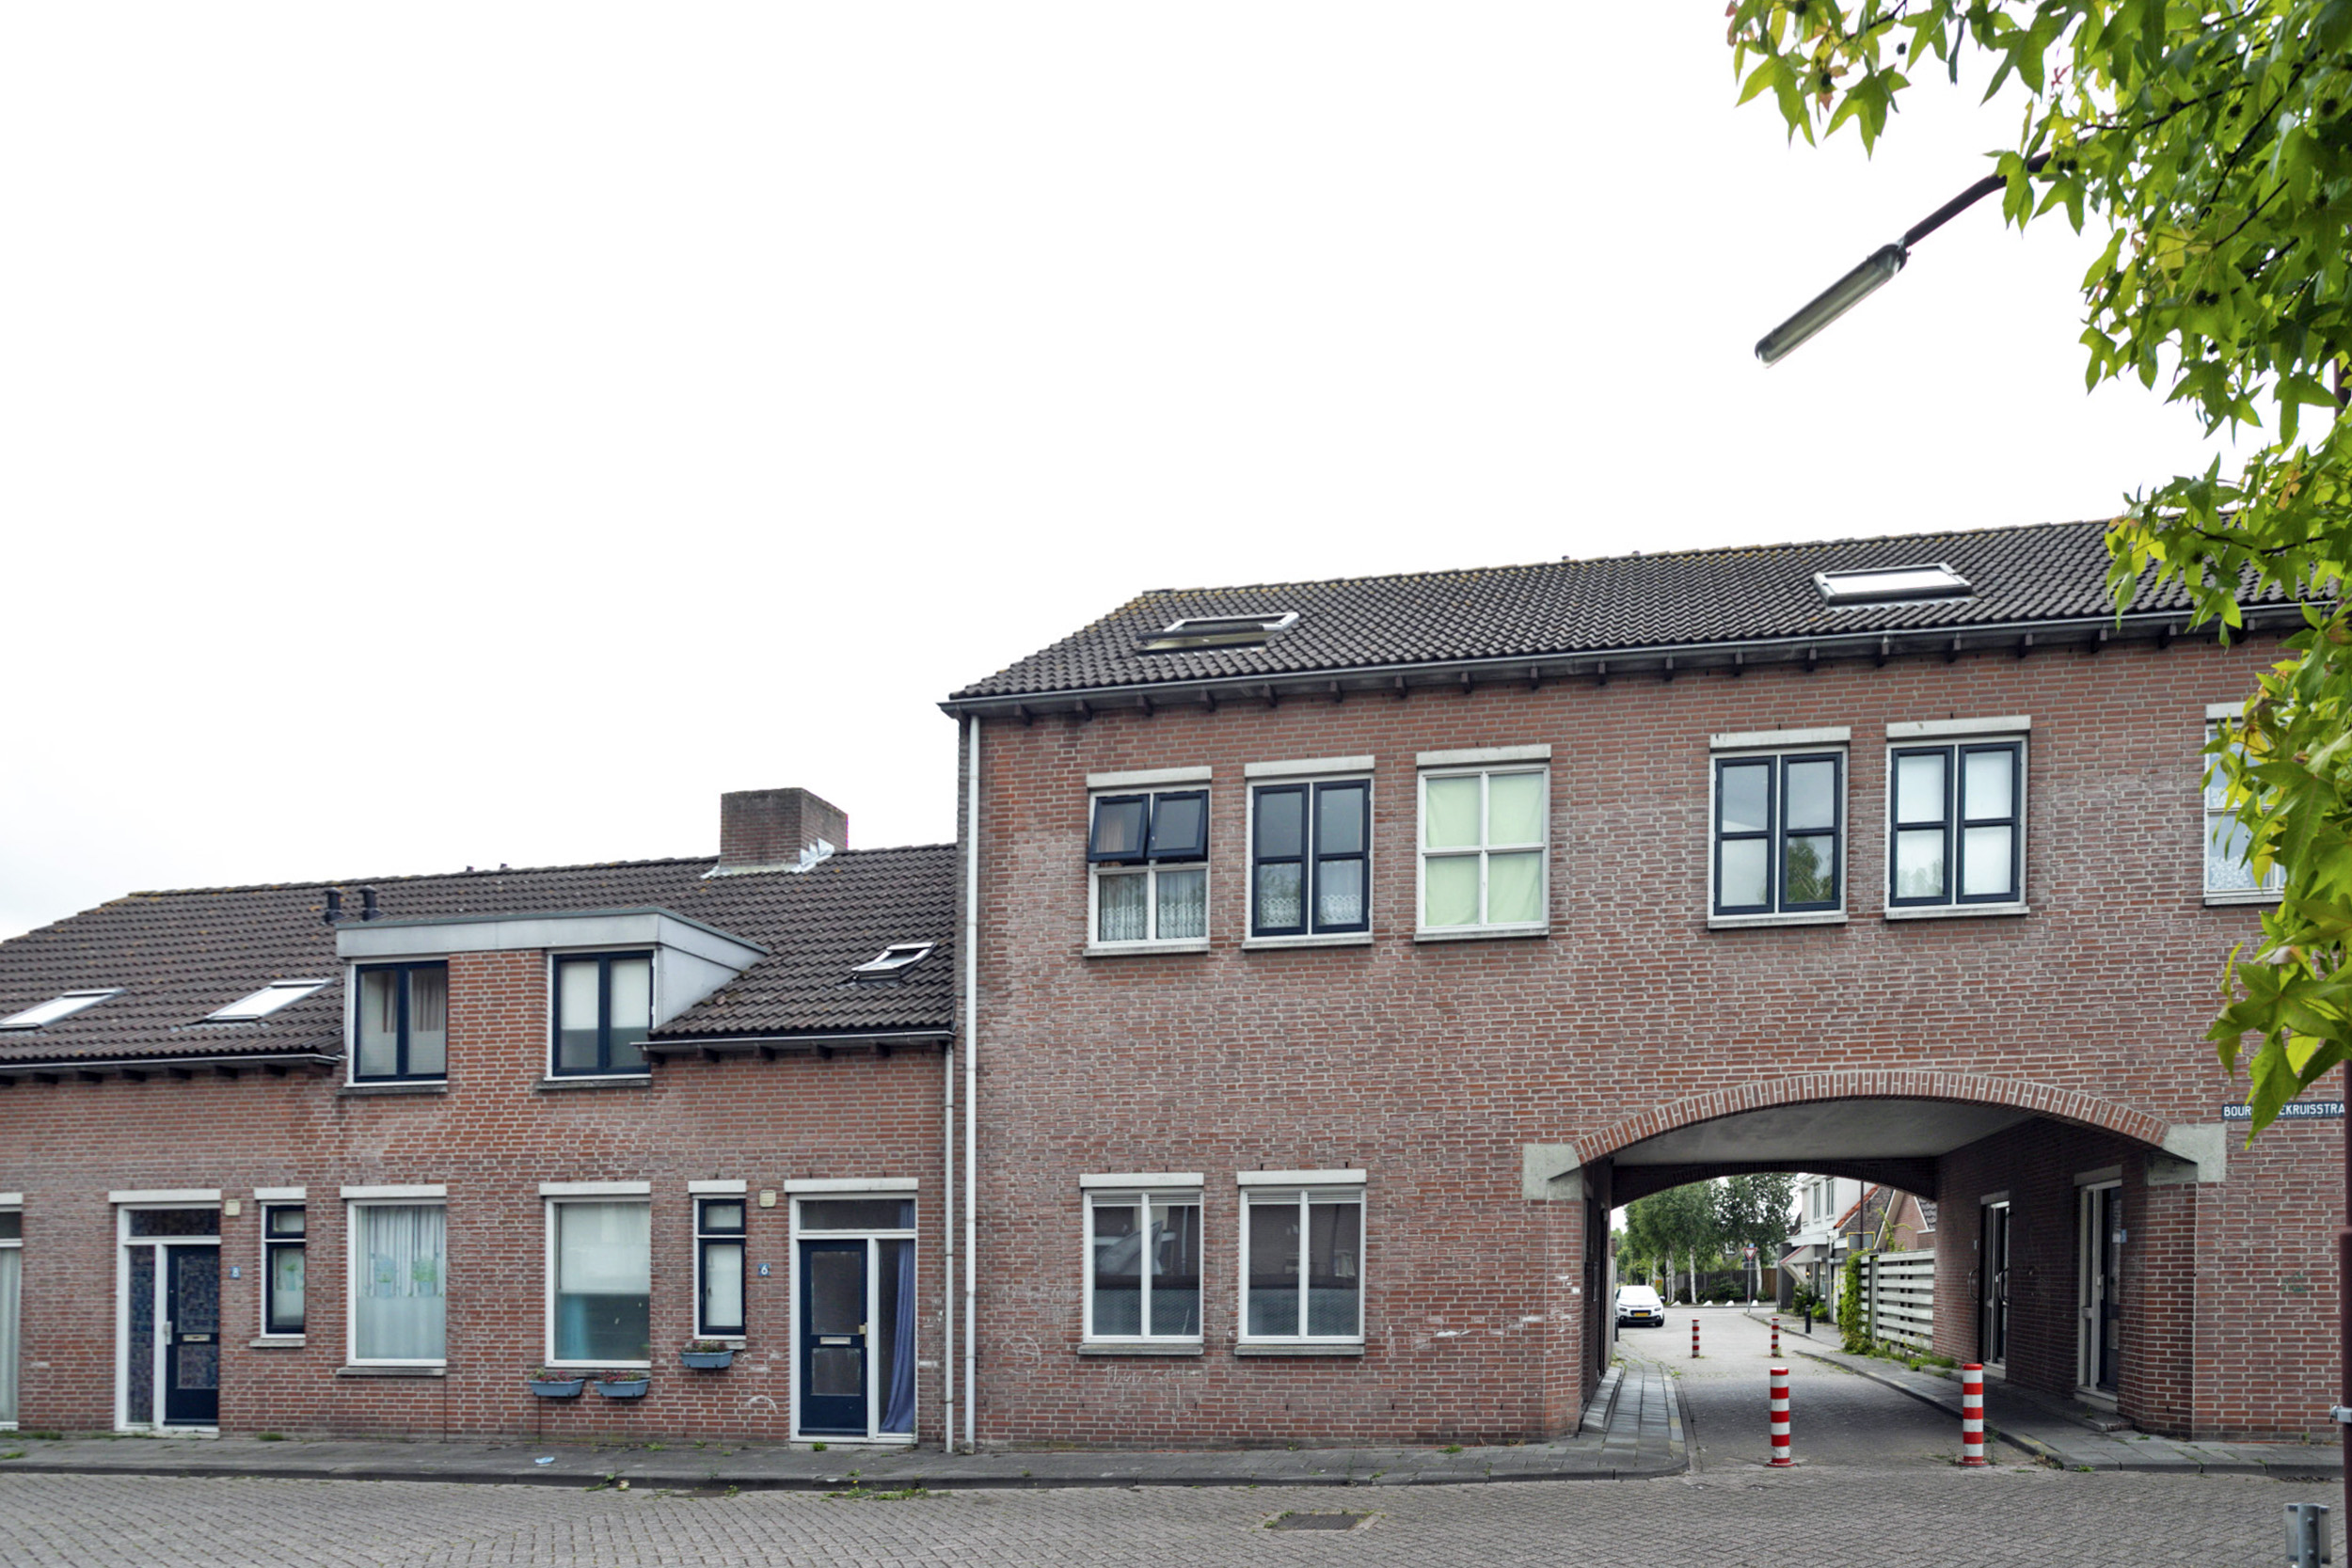 Fortuinstraat 2, 4731 PD Oudenbosch, Nederland